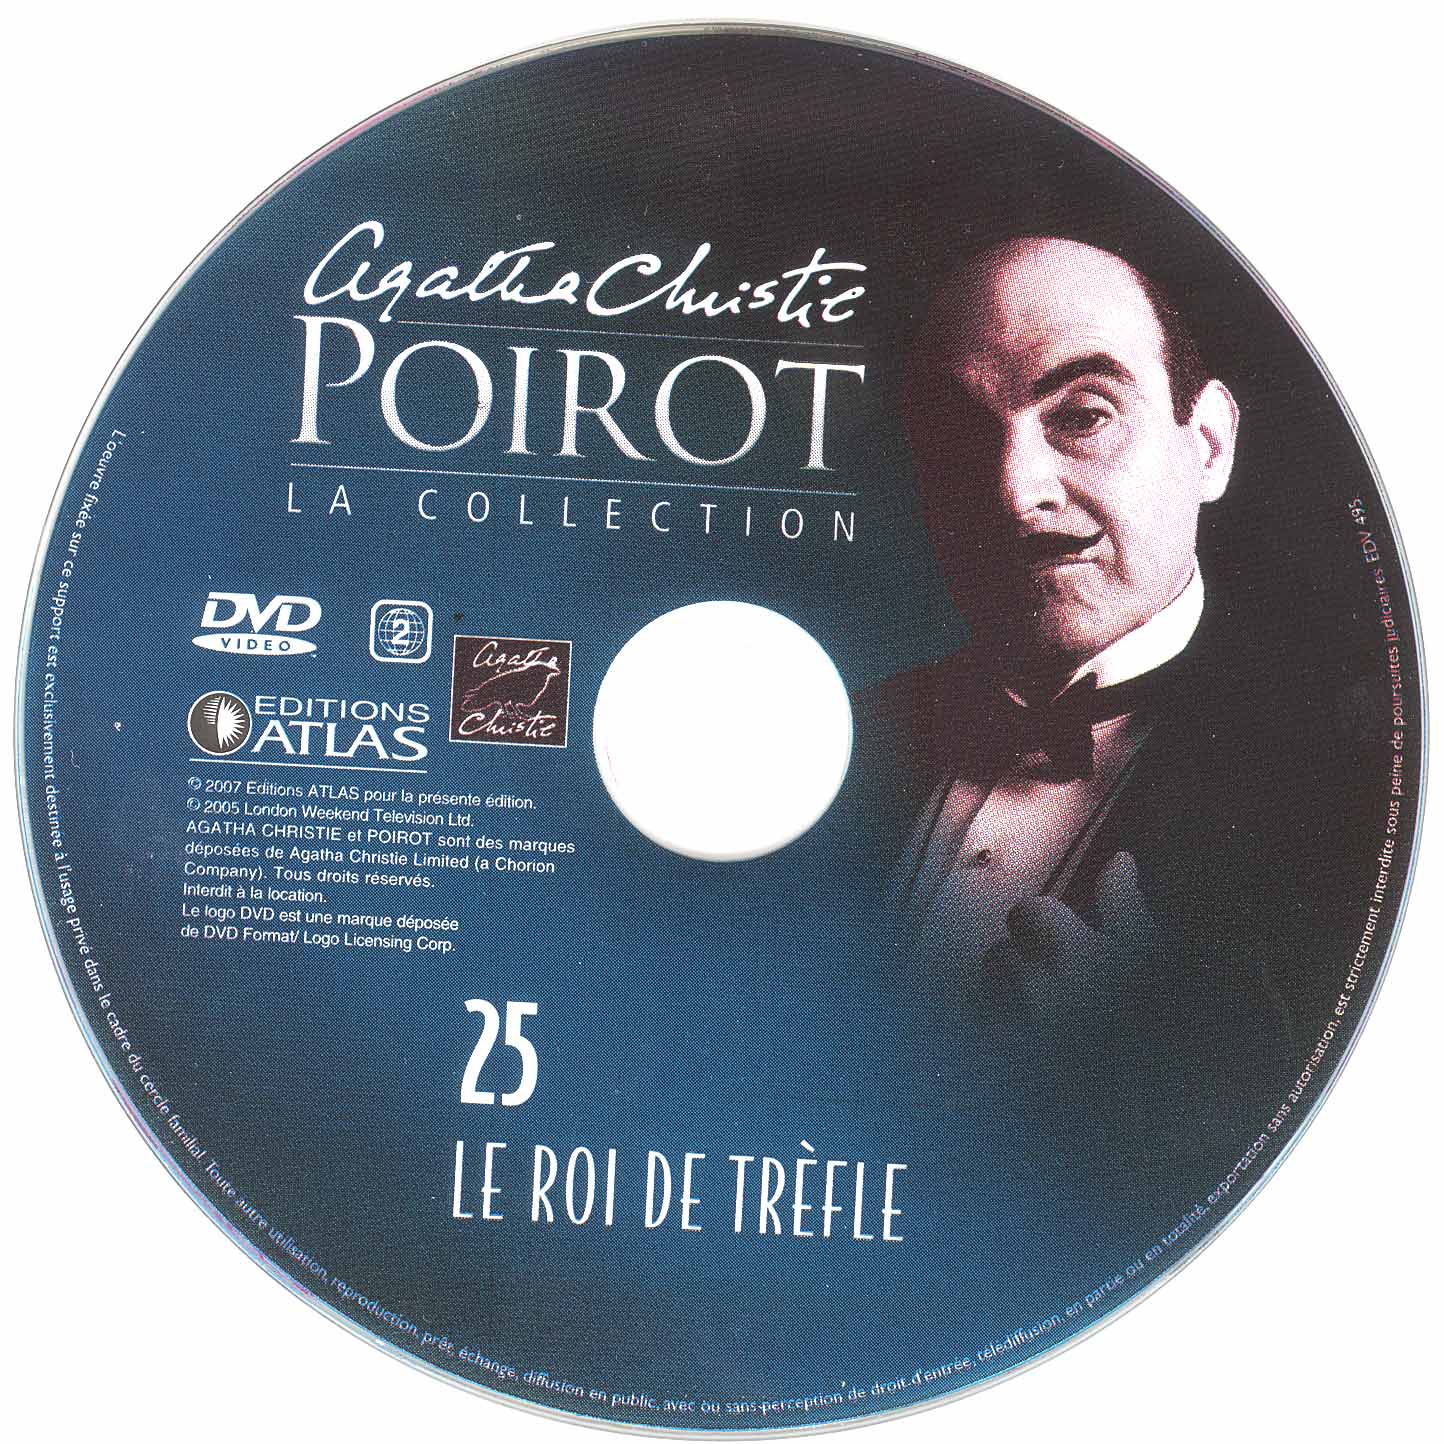 Hercule Poirot vol 25